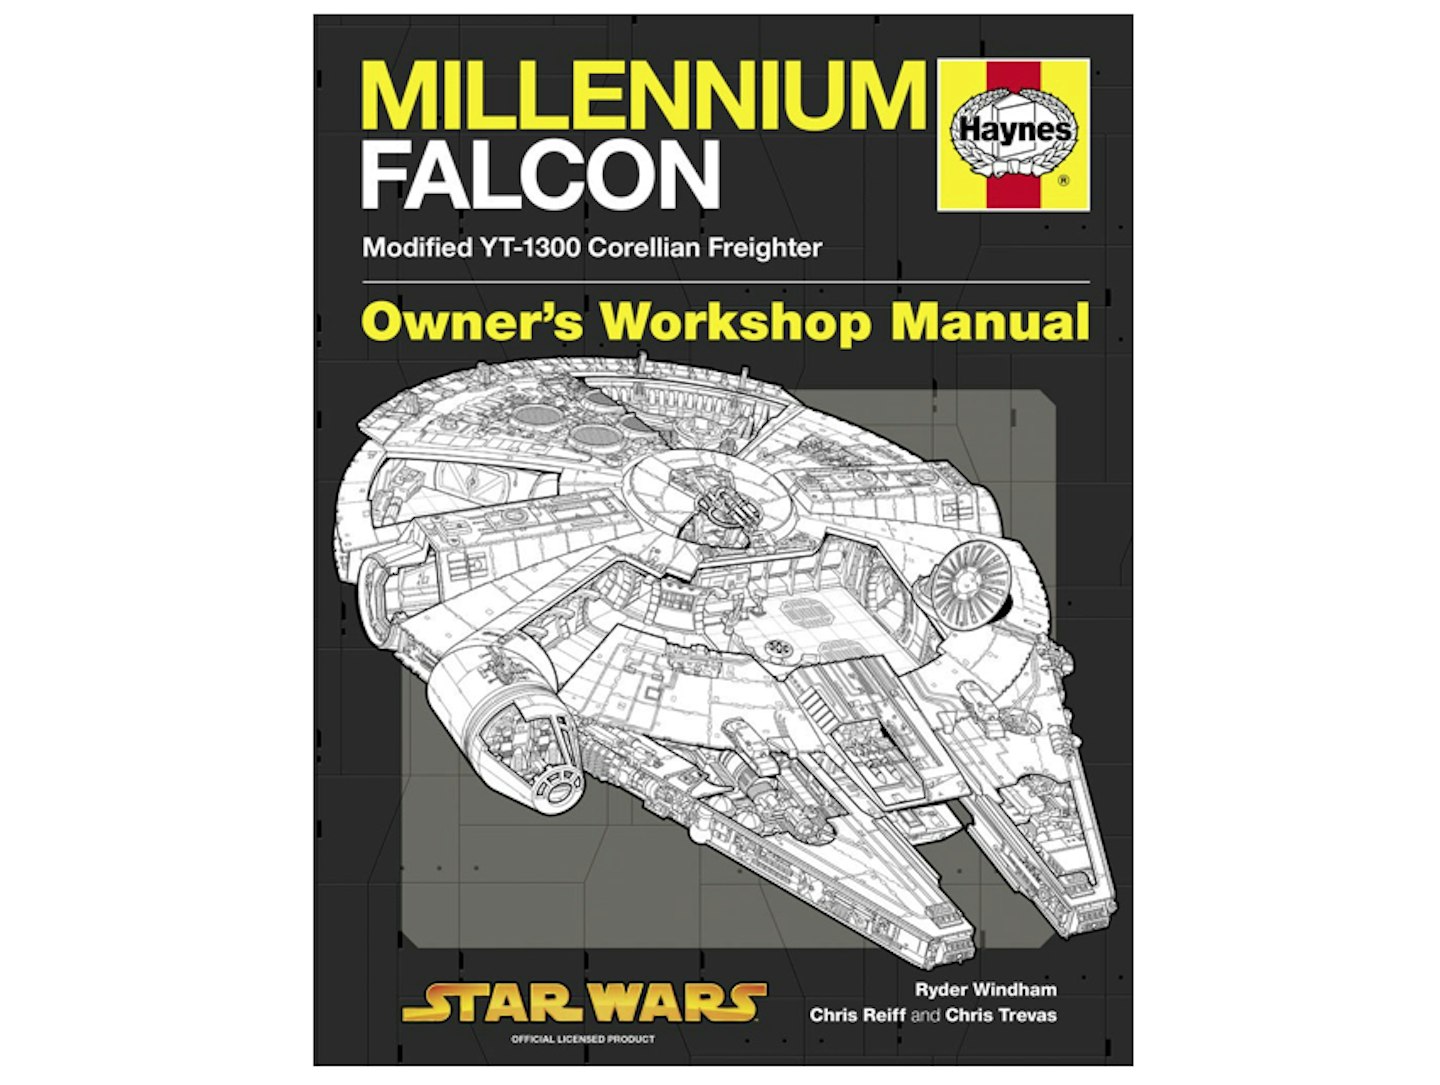 Millennium Falcon Manual: 1977 Onwards (Modified YT-1300 Corellian Freighter)